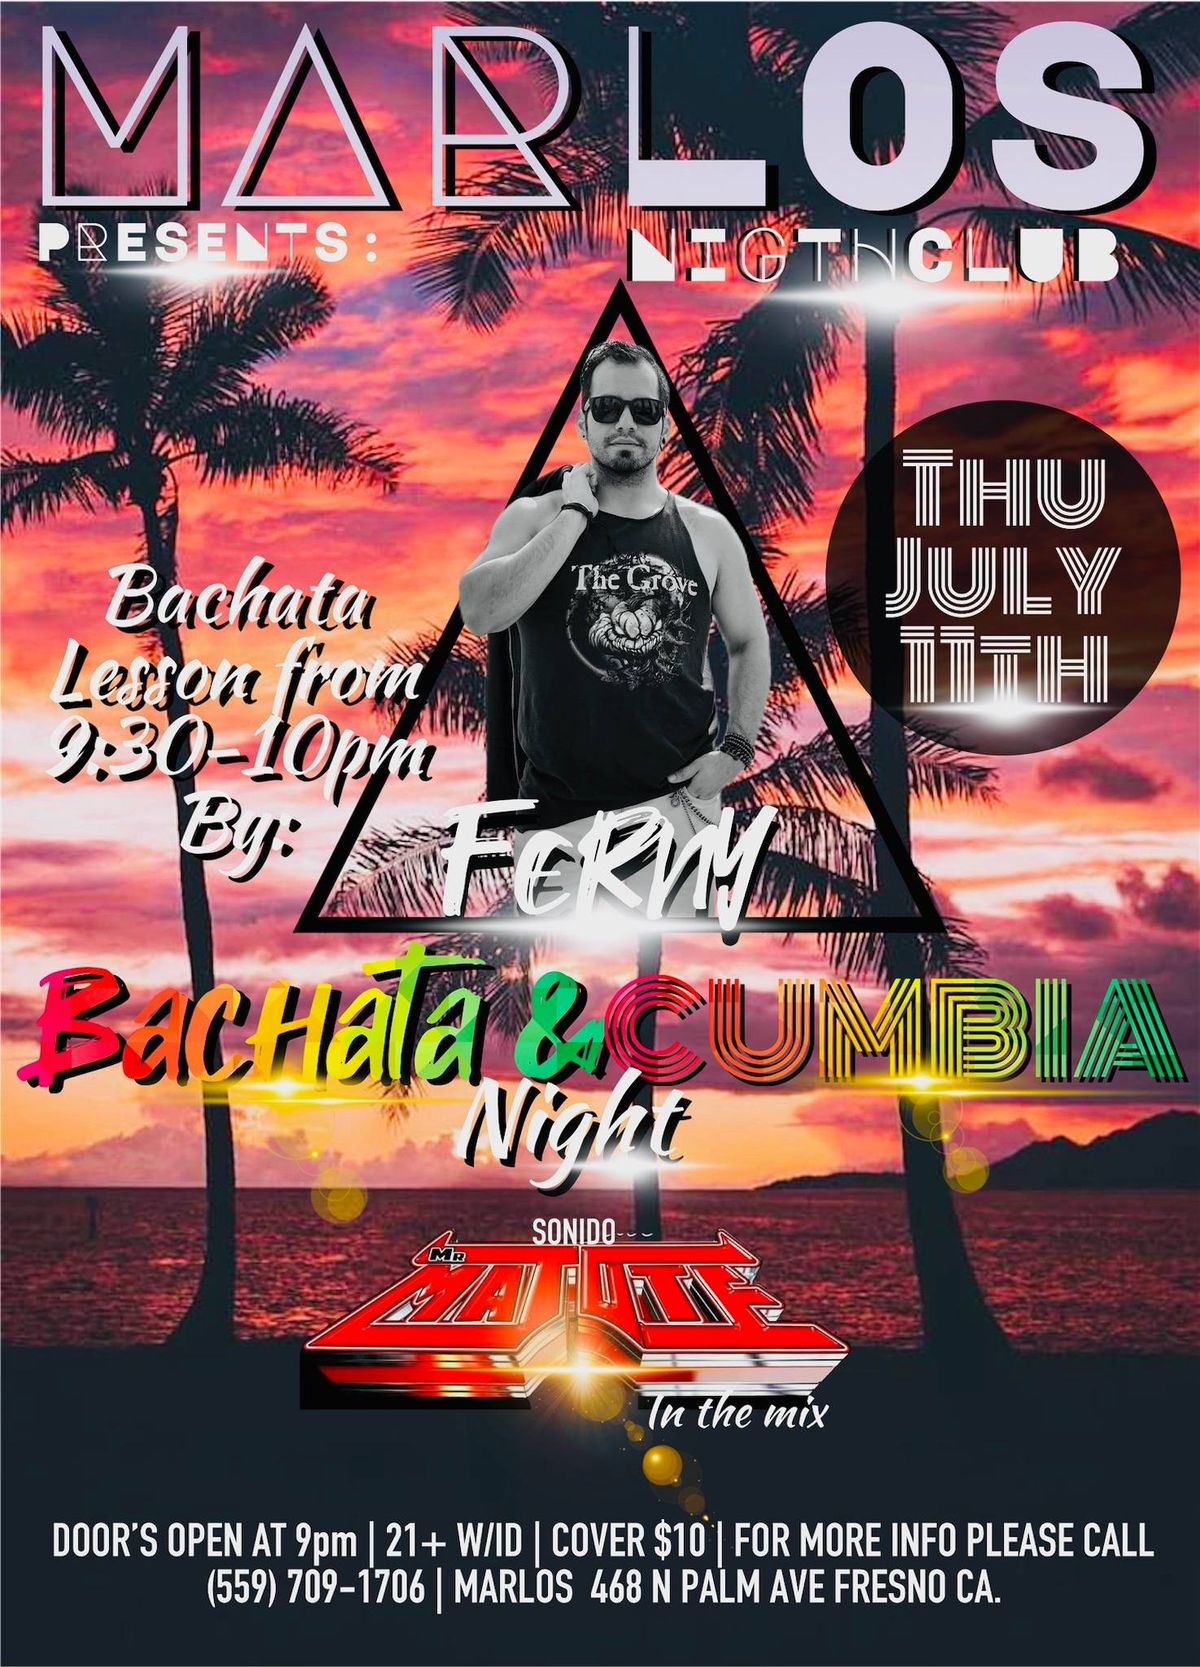 Bachata & Cumbia Night - Fernie and DJ Matute